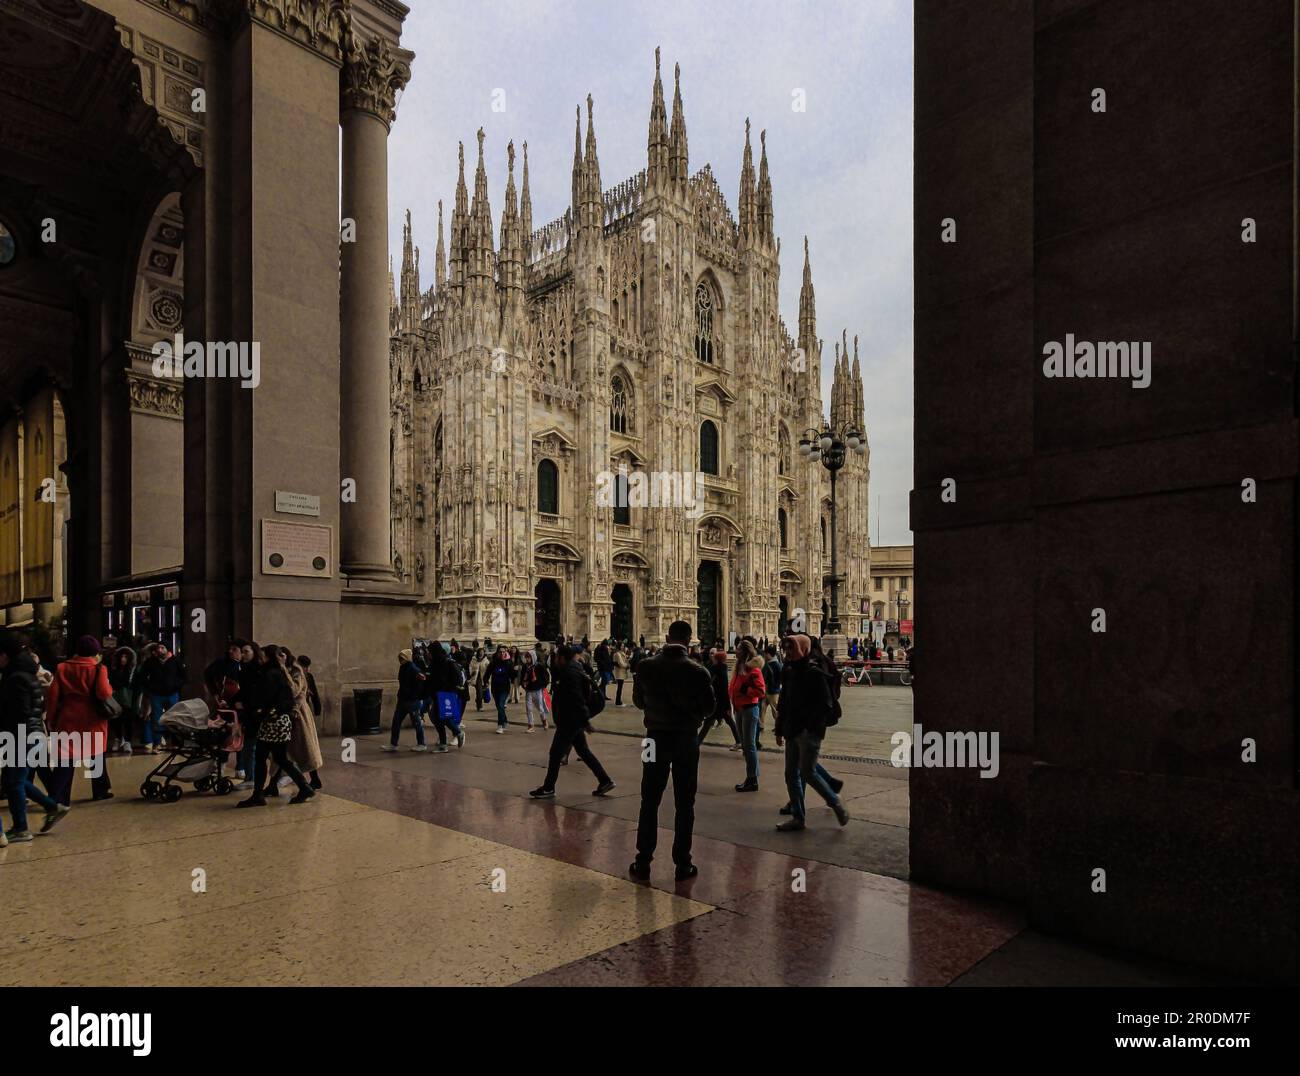 Au coeur de Milan: Piazza del Duomo et la galerie Vittorio Emanuele II - Milan, Italie Banque D'Images